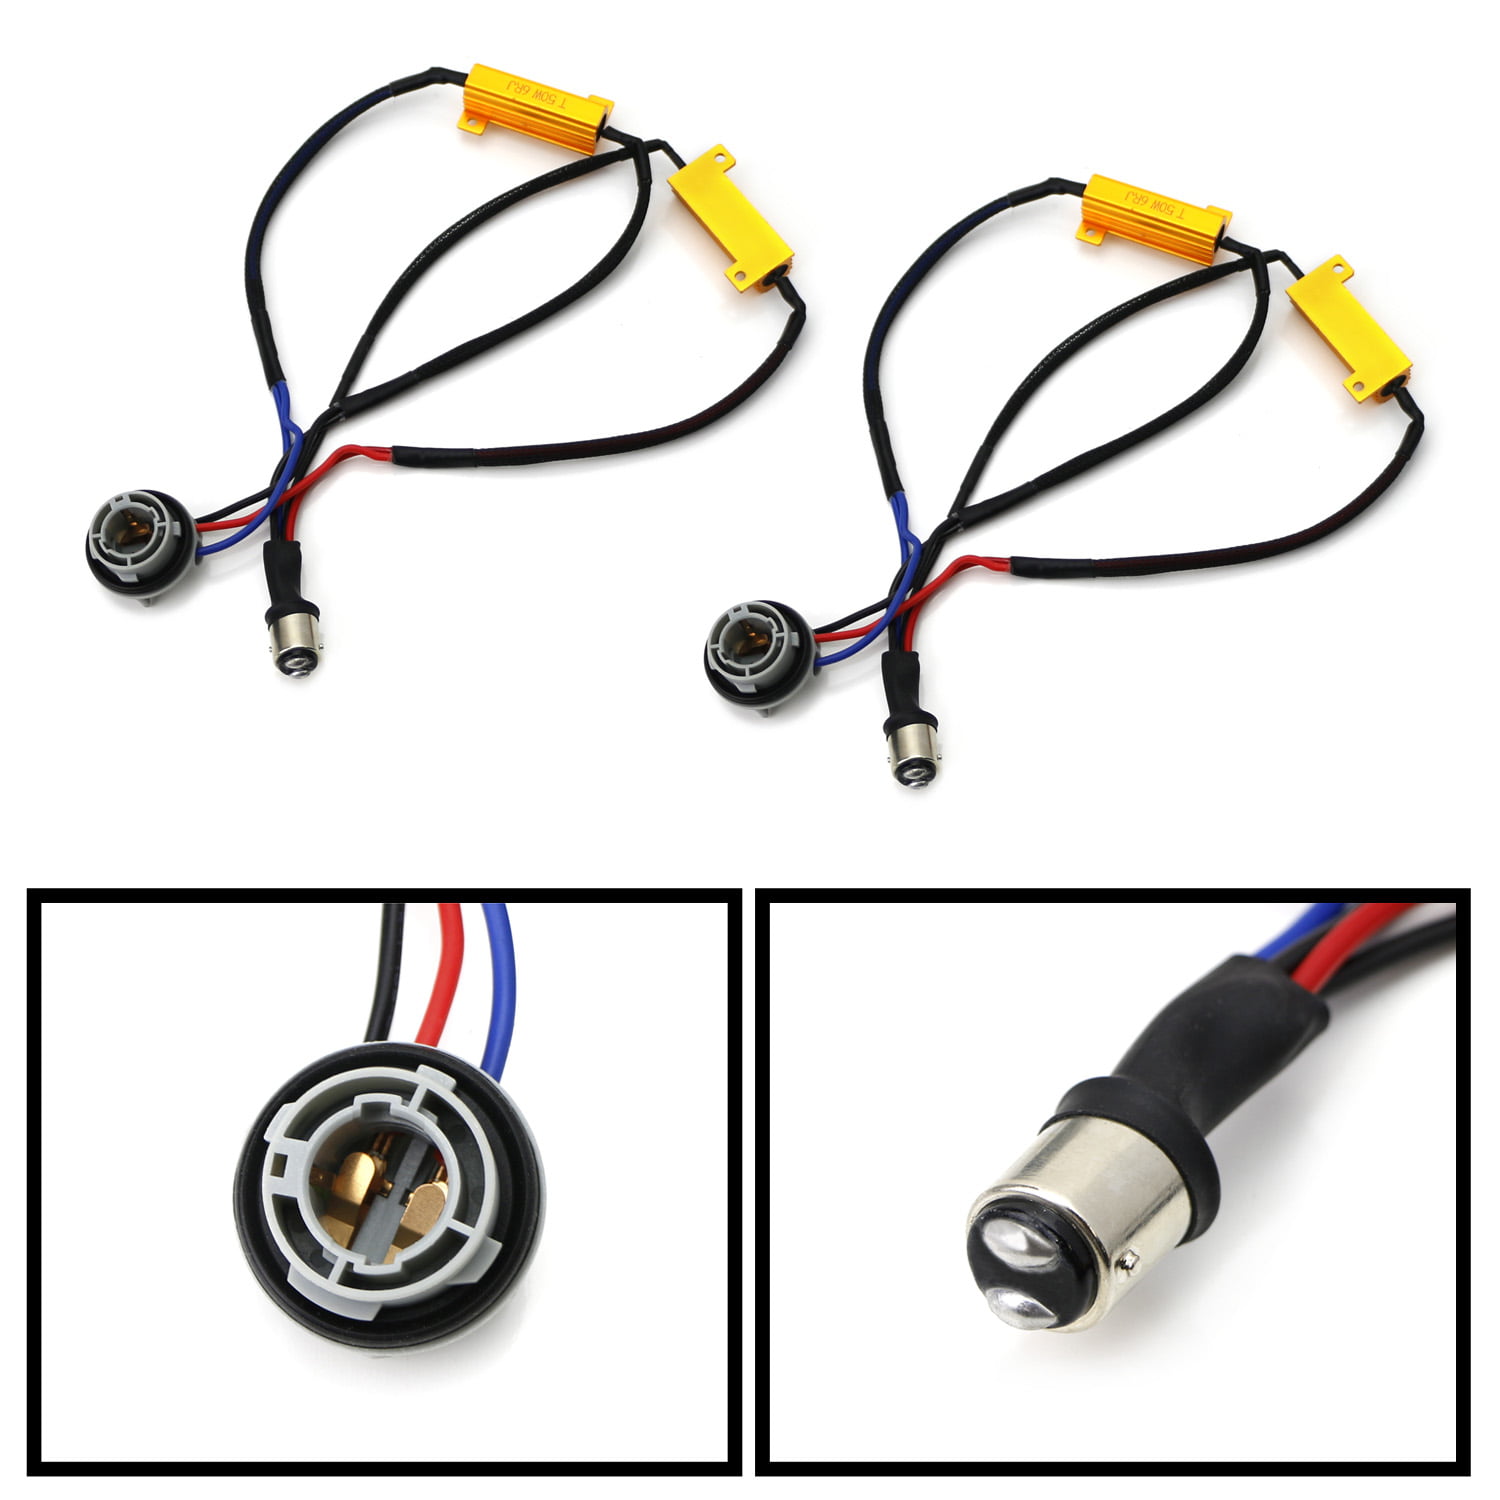 2PC 1157 Decoder Resistor LED Turn Stop Brake Light Hyper Flash Fix canceller US